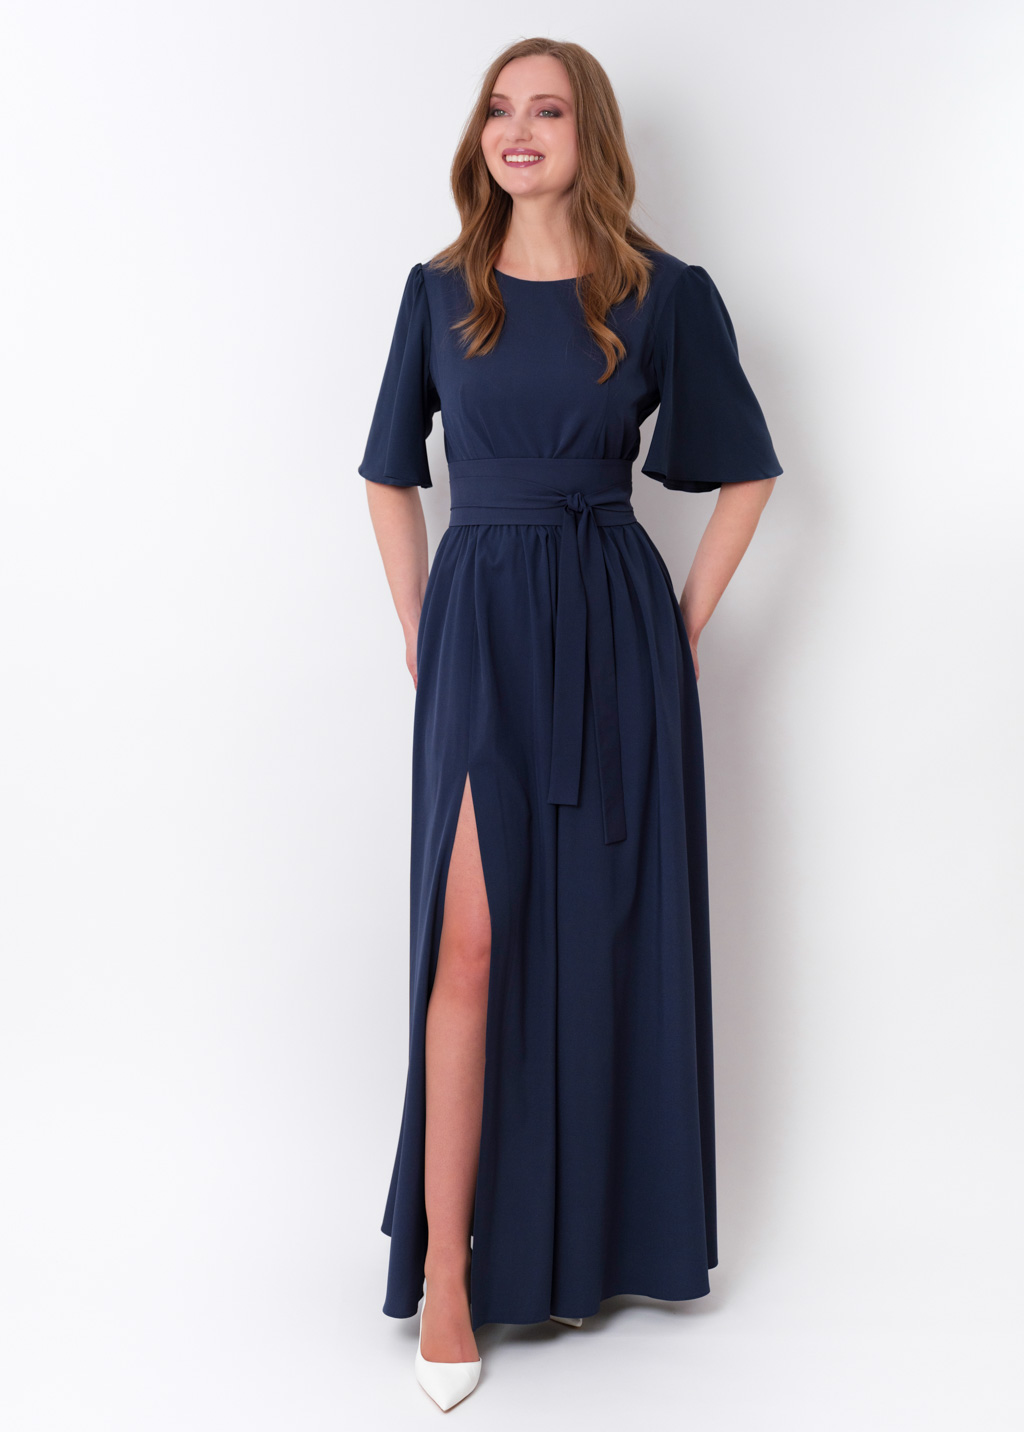 Navy blue long slit dress with belt